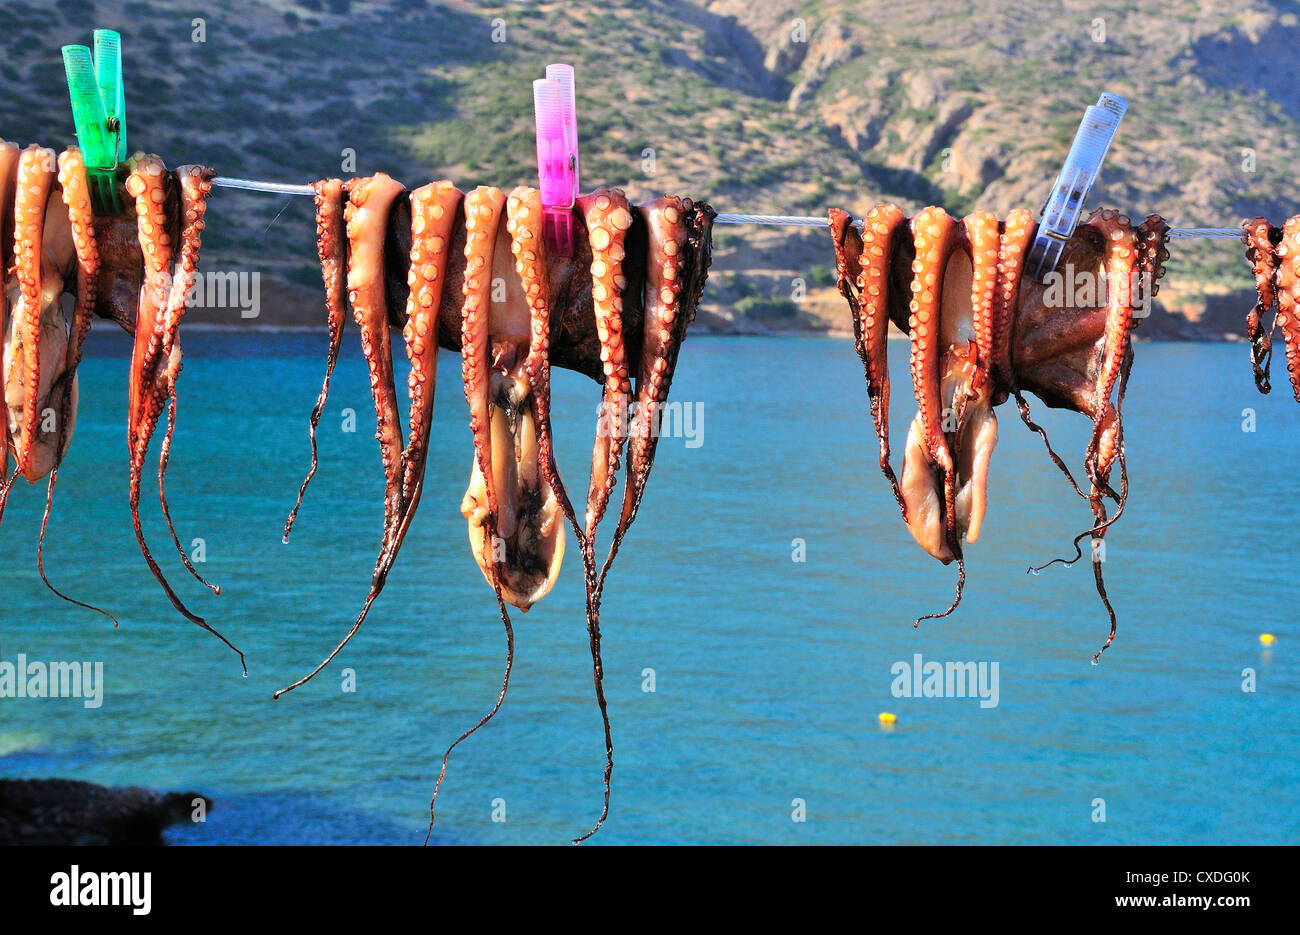 Appena catturati i calamari calamari o ancorato su una linea e di essiccazione al sole al di fuori di una taverna in Plaka, vicino a Elounda, Creta, Grecia Foto Stock